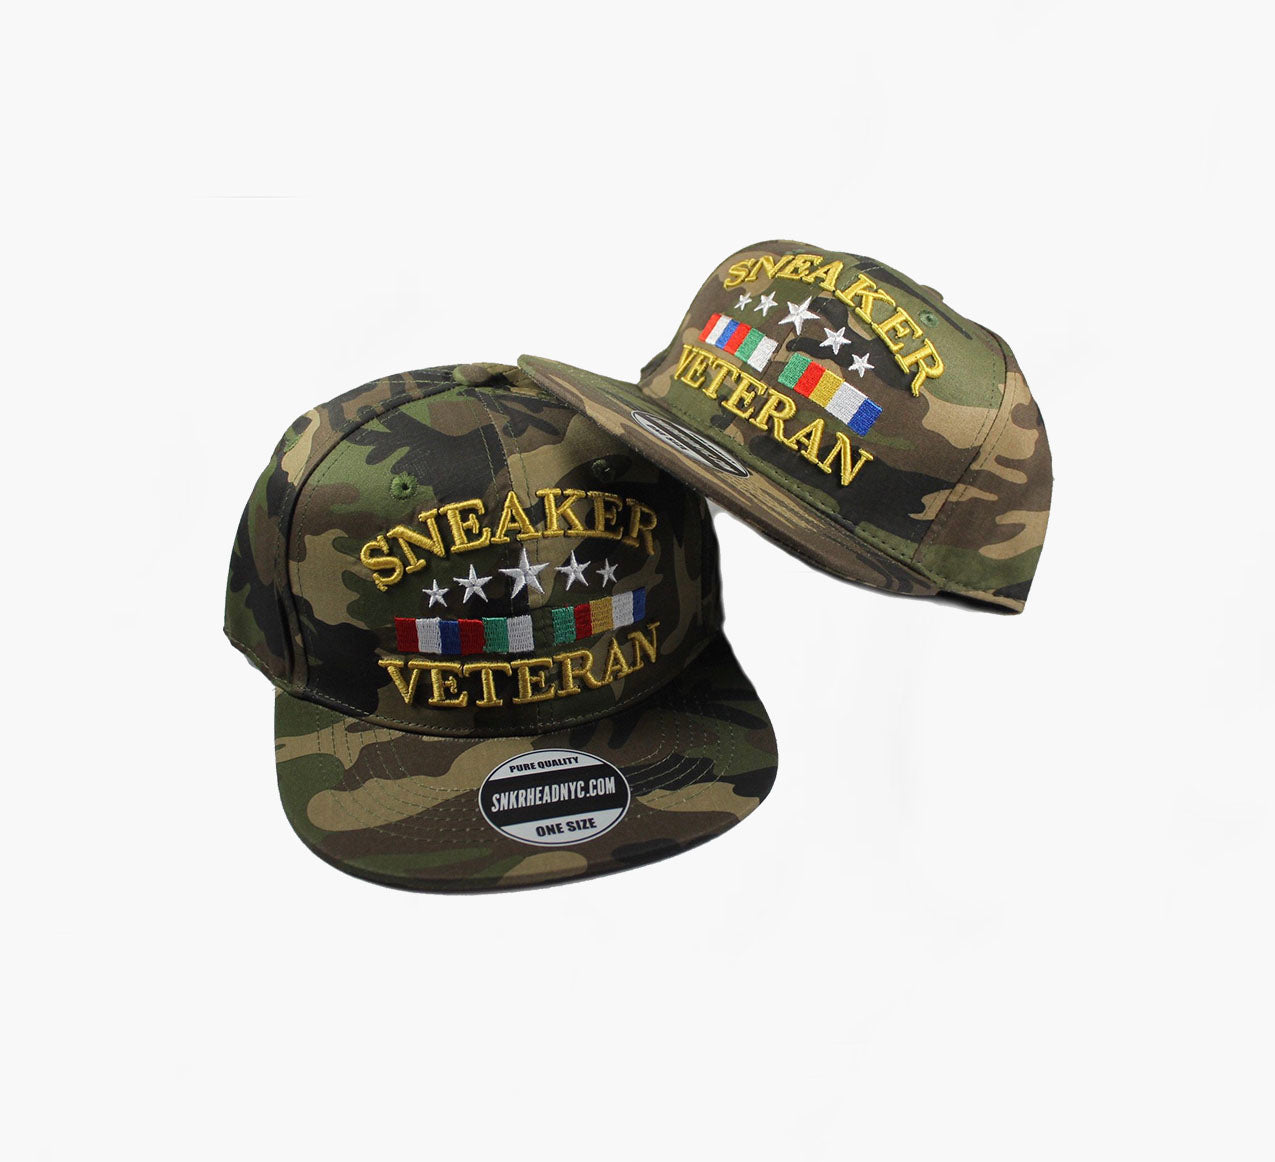 Sneaker Veteran CAMO Snapback Hat